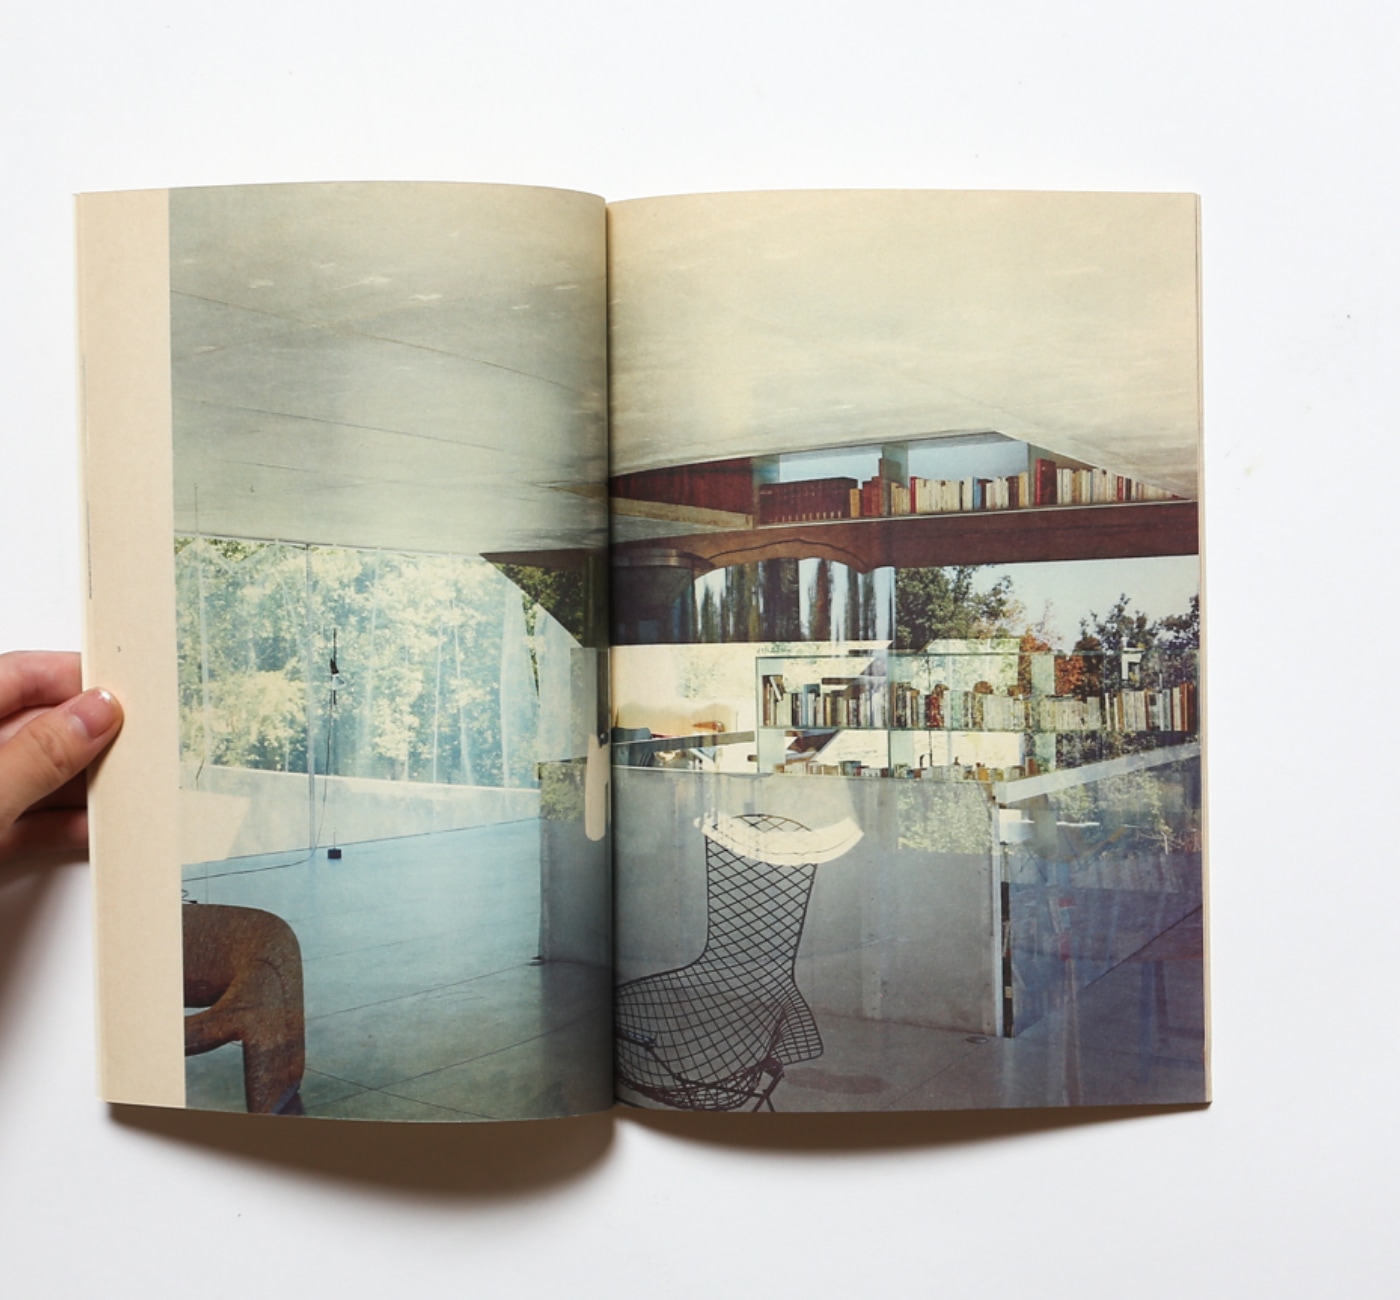 Takashi Homma: Architectural Landscapes